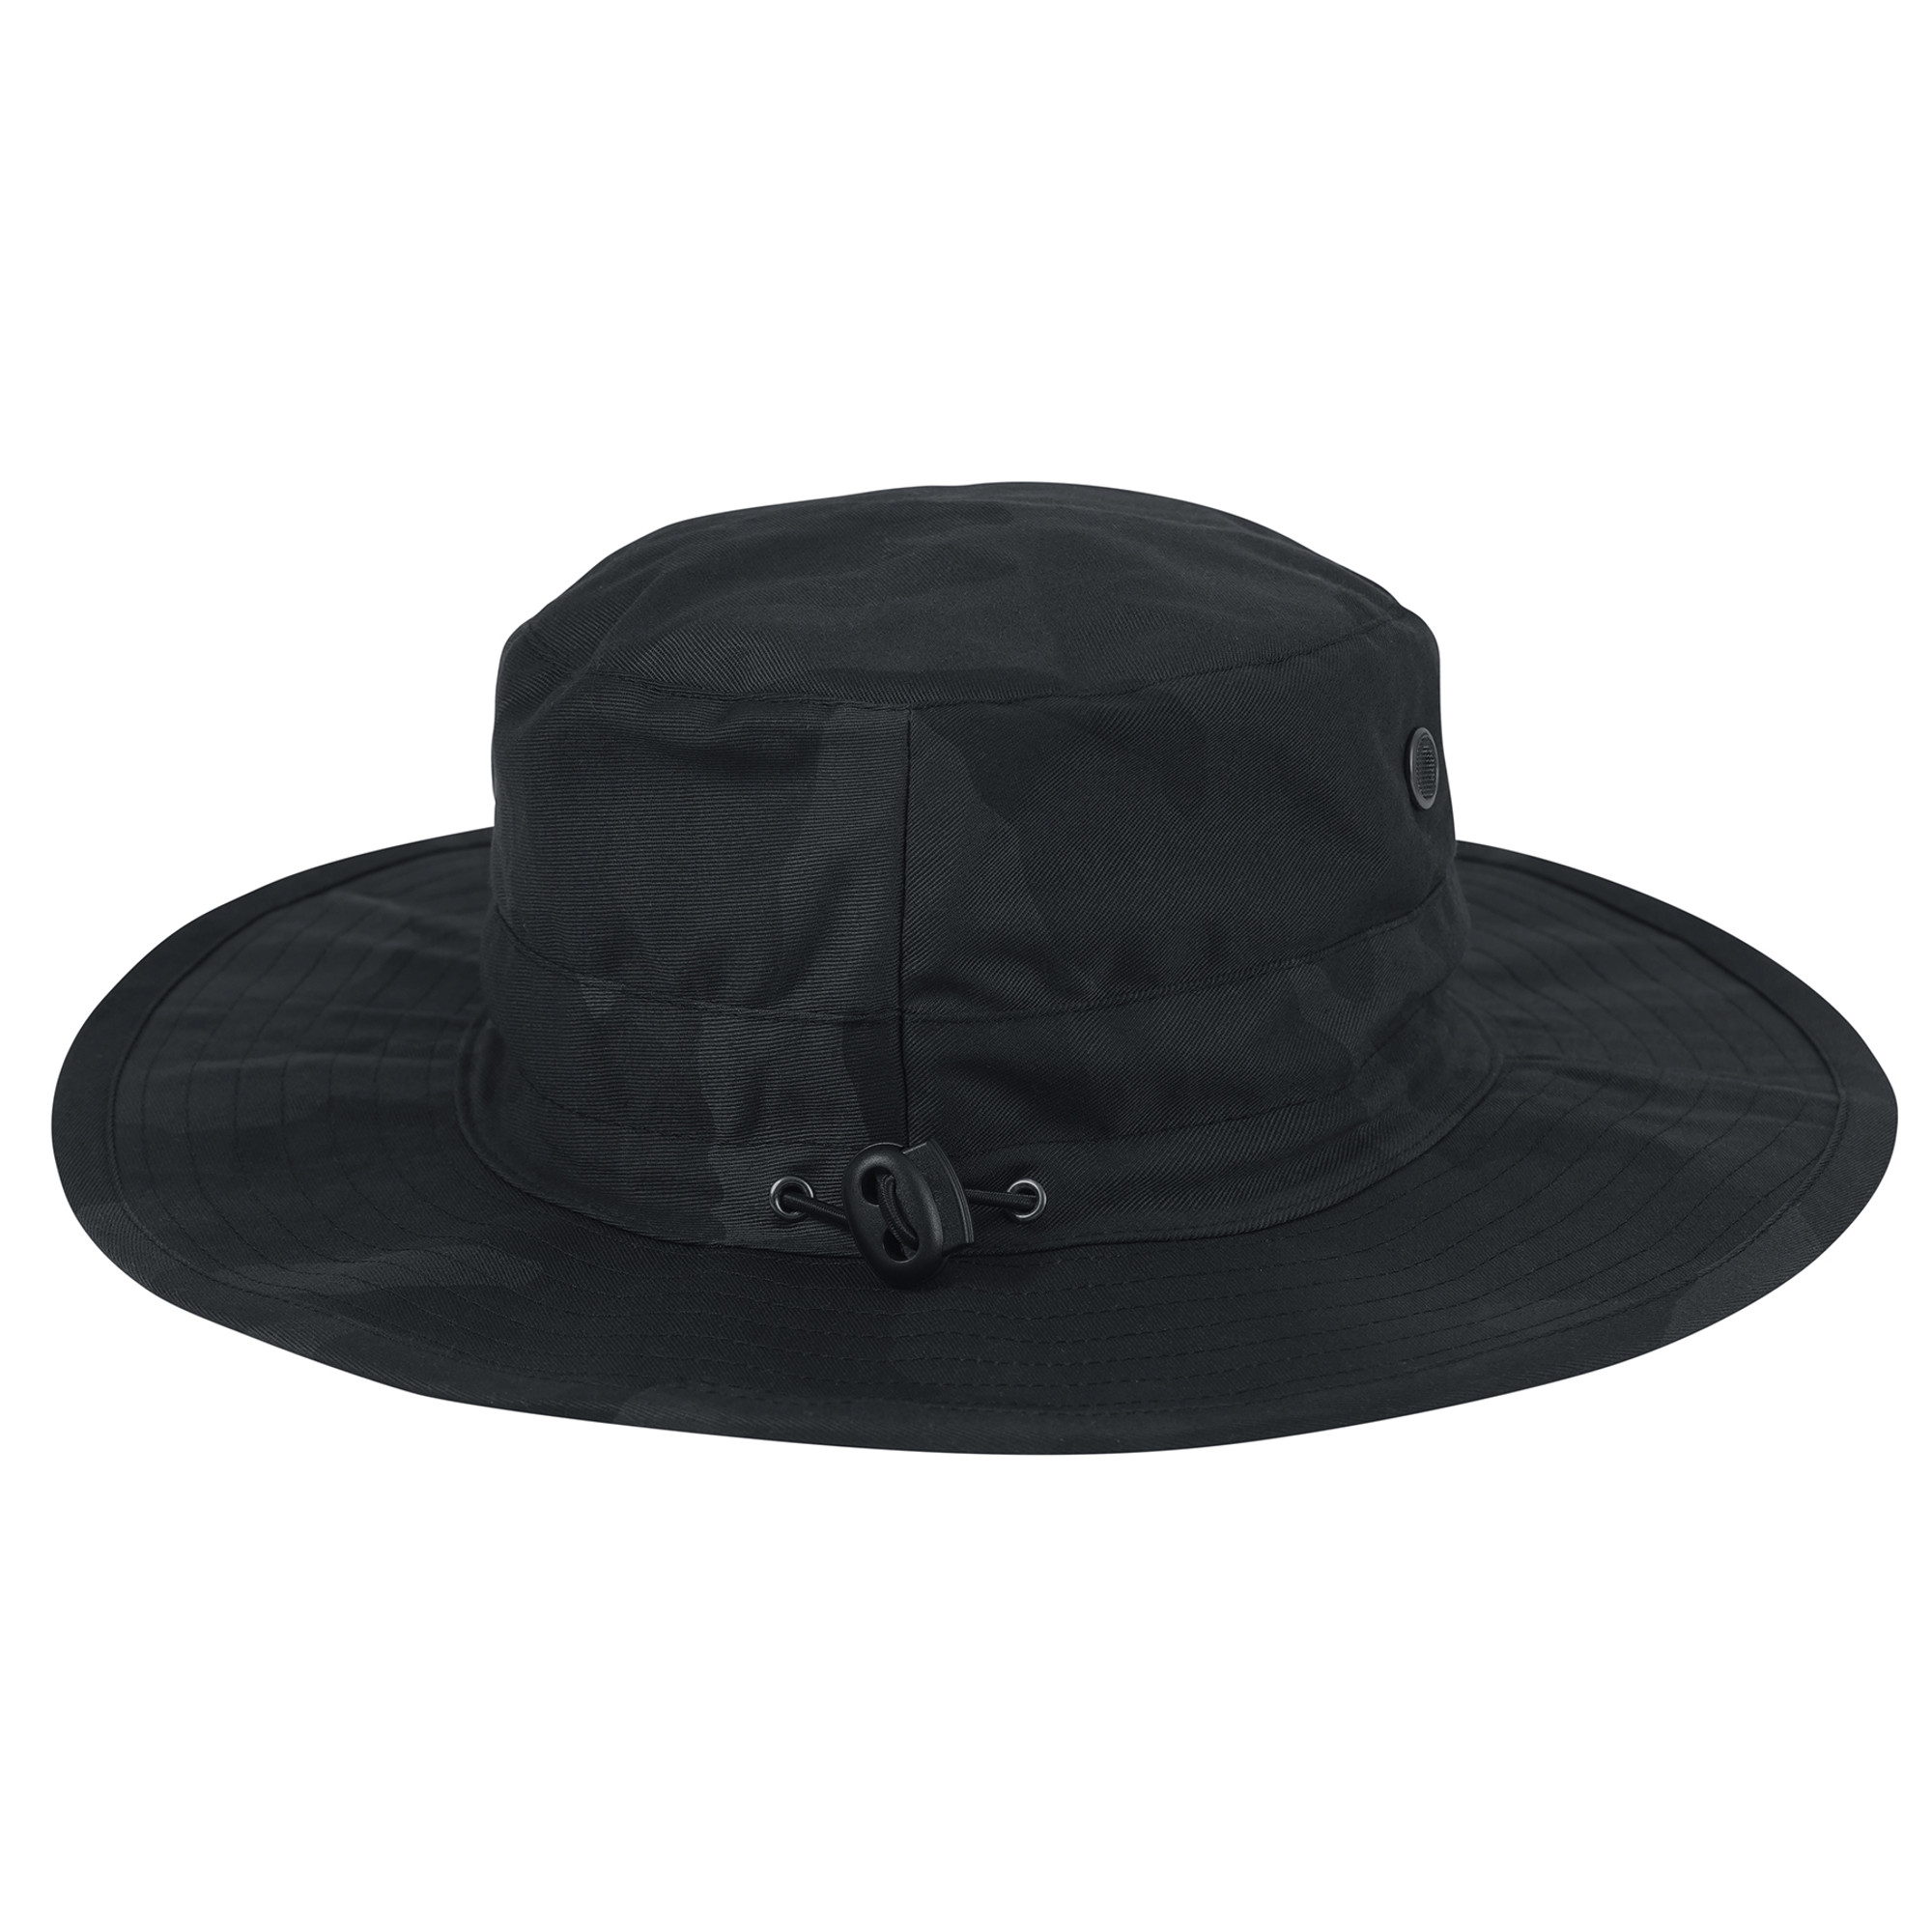 Rothco Adjustable Boonie Hat - Midnight Black Camo